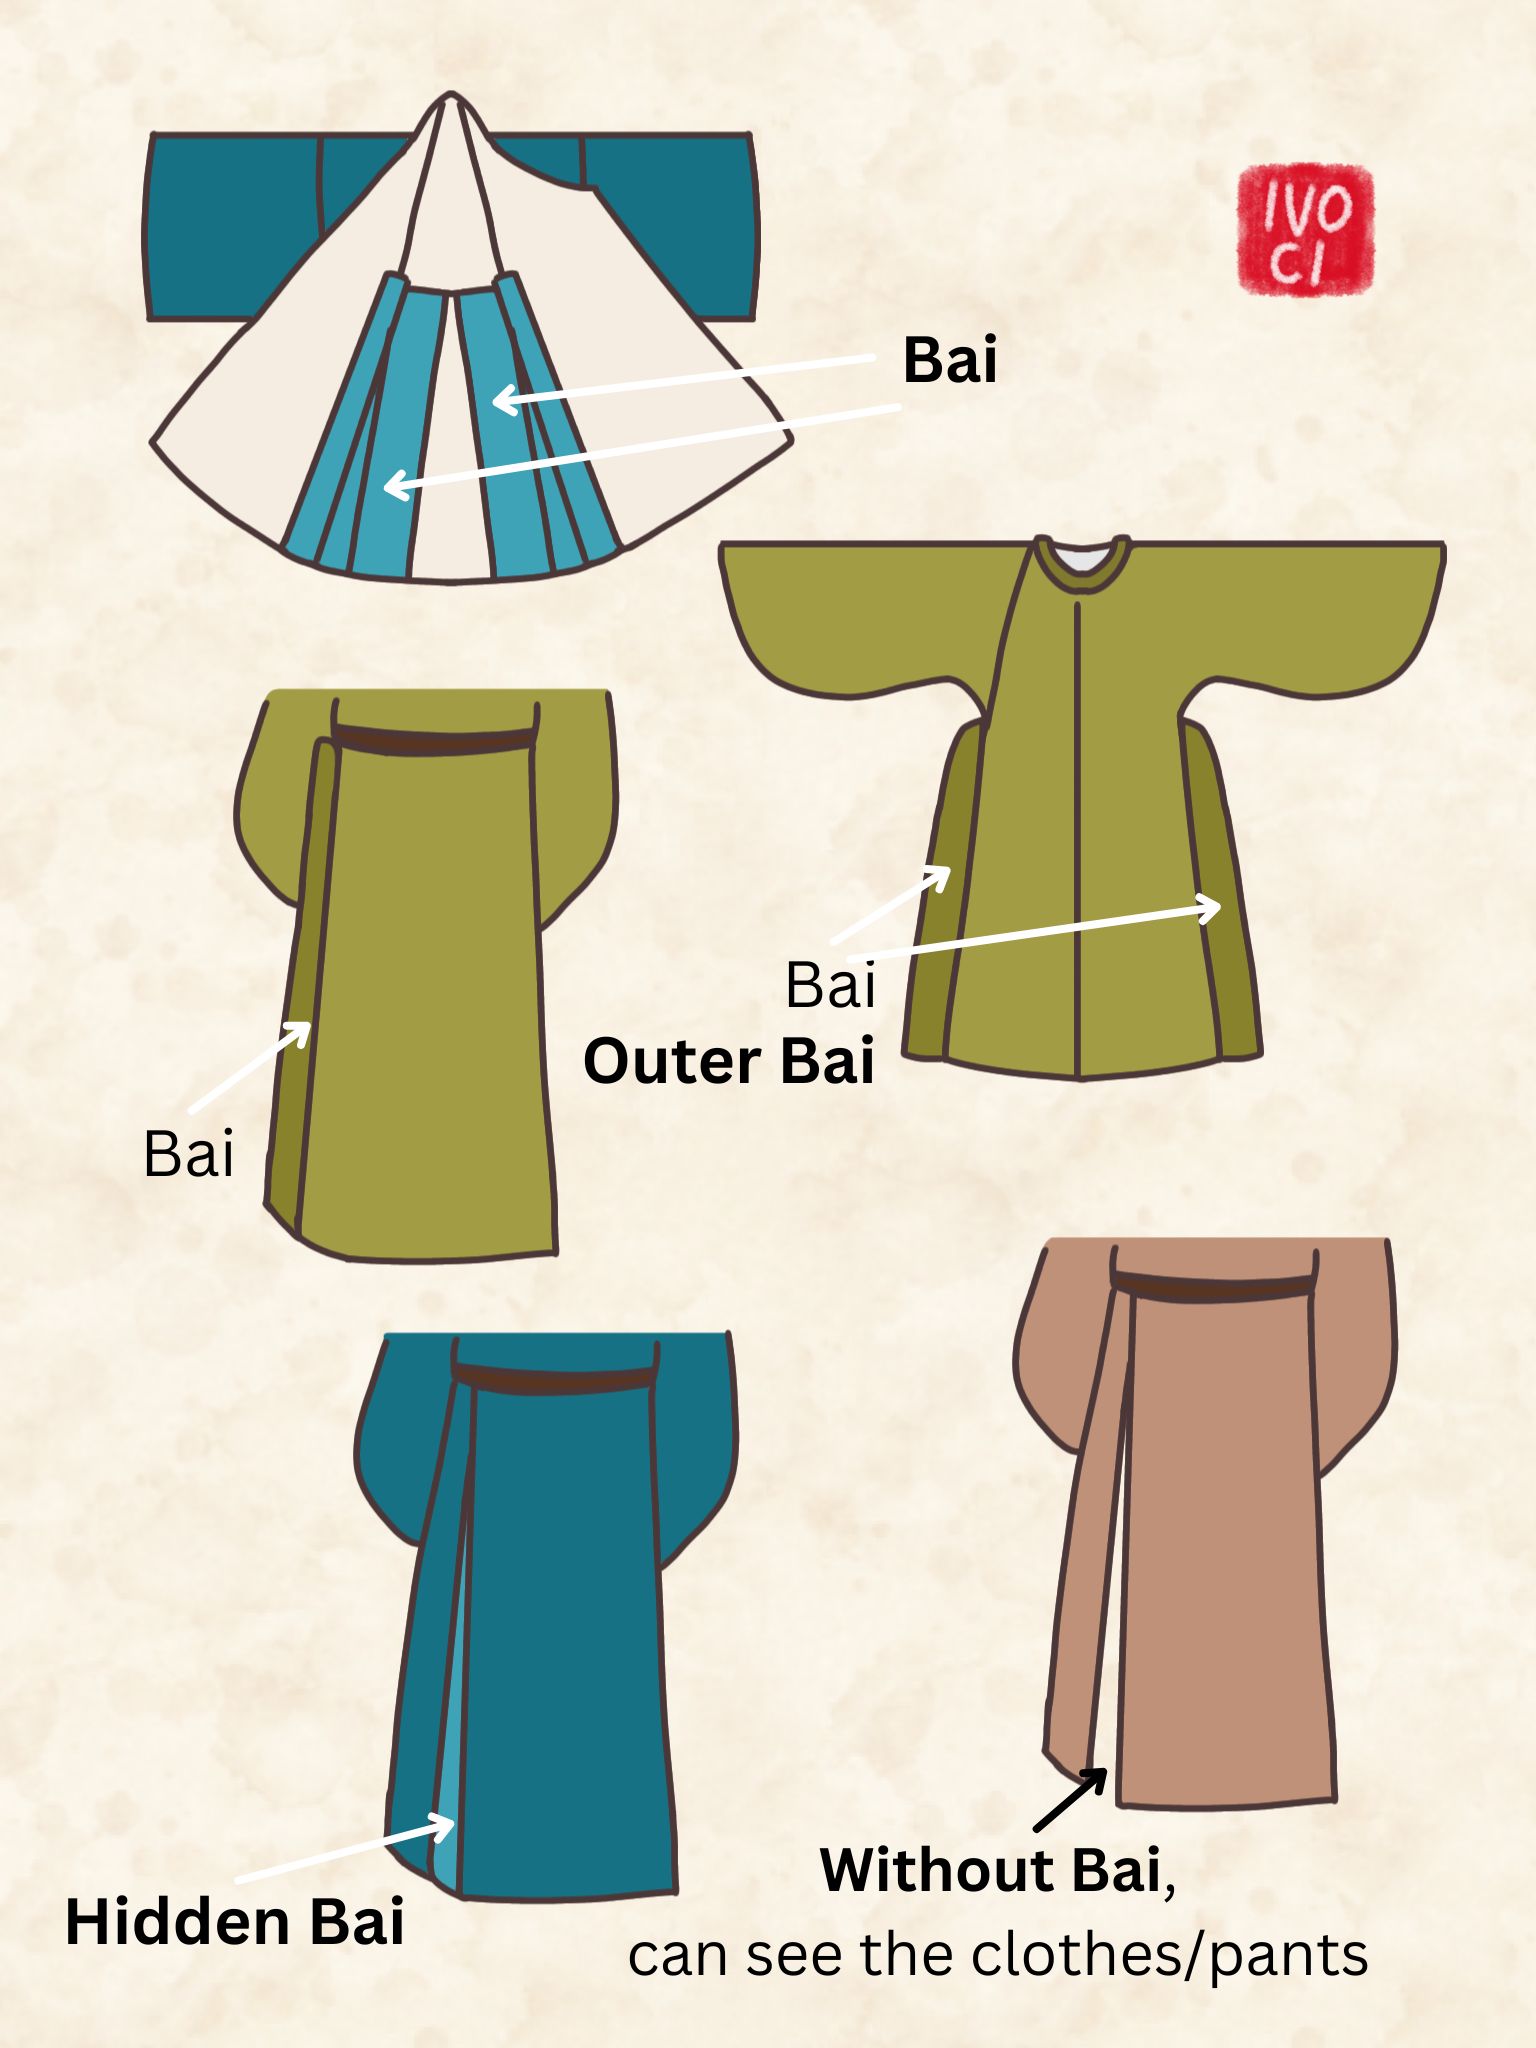 ivoci - Zhiduo 直裰, Ancient China Writers Clothing - 2